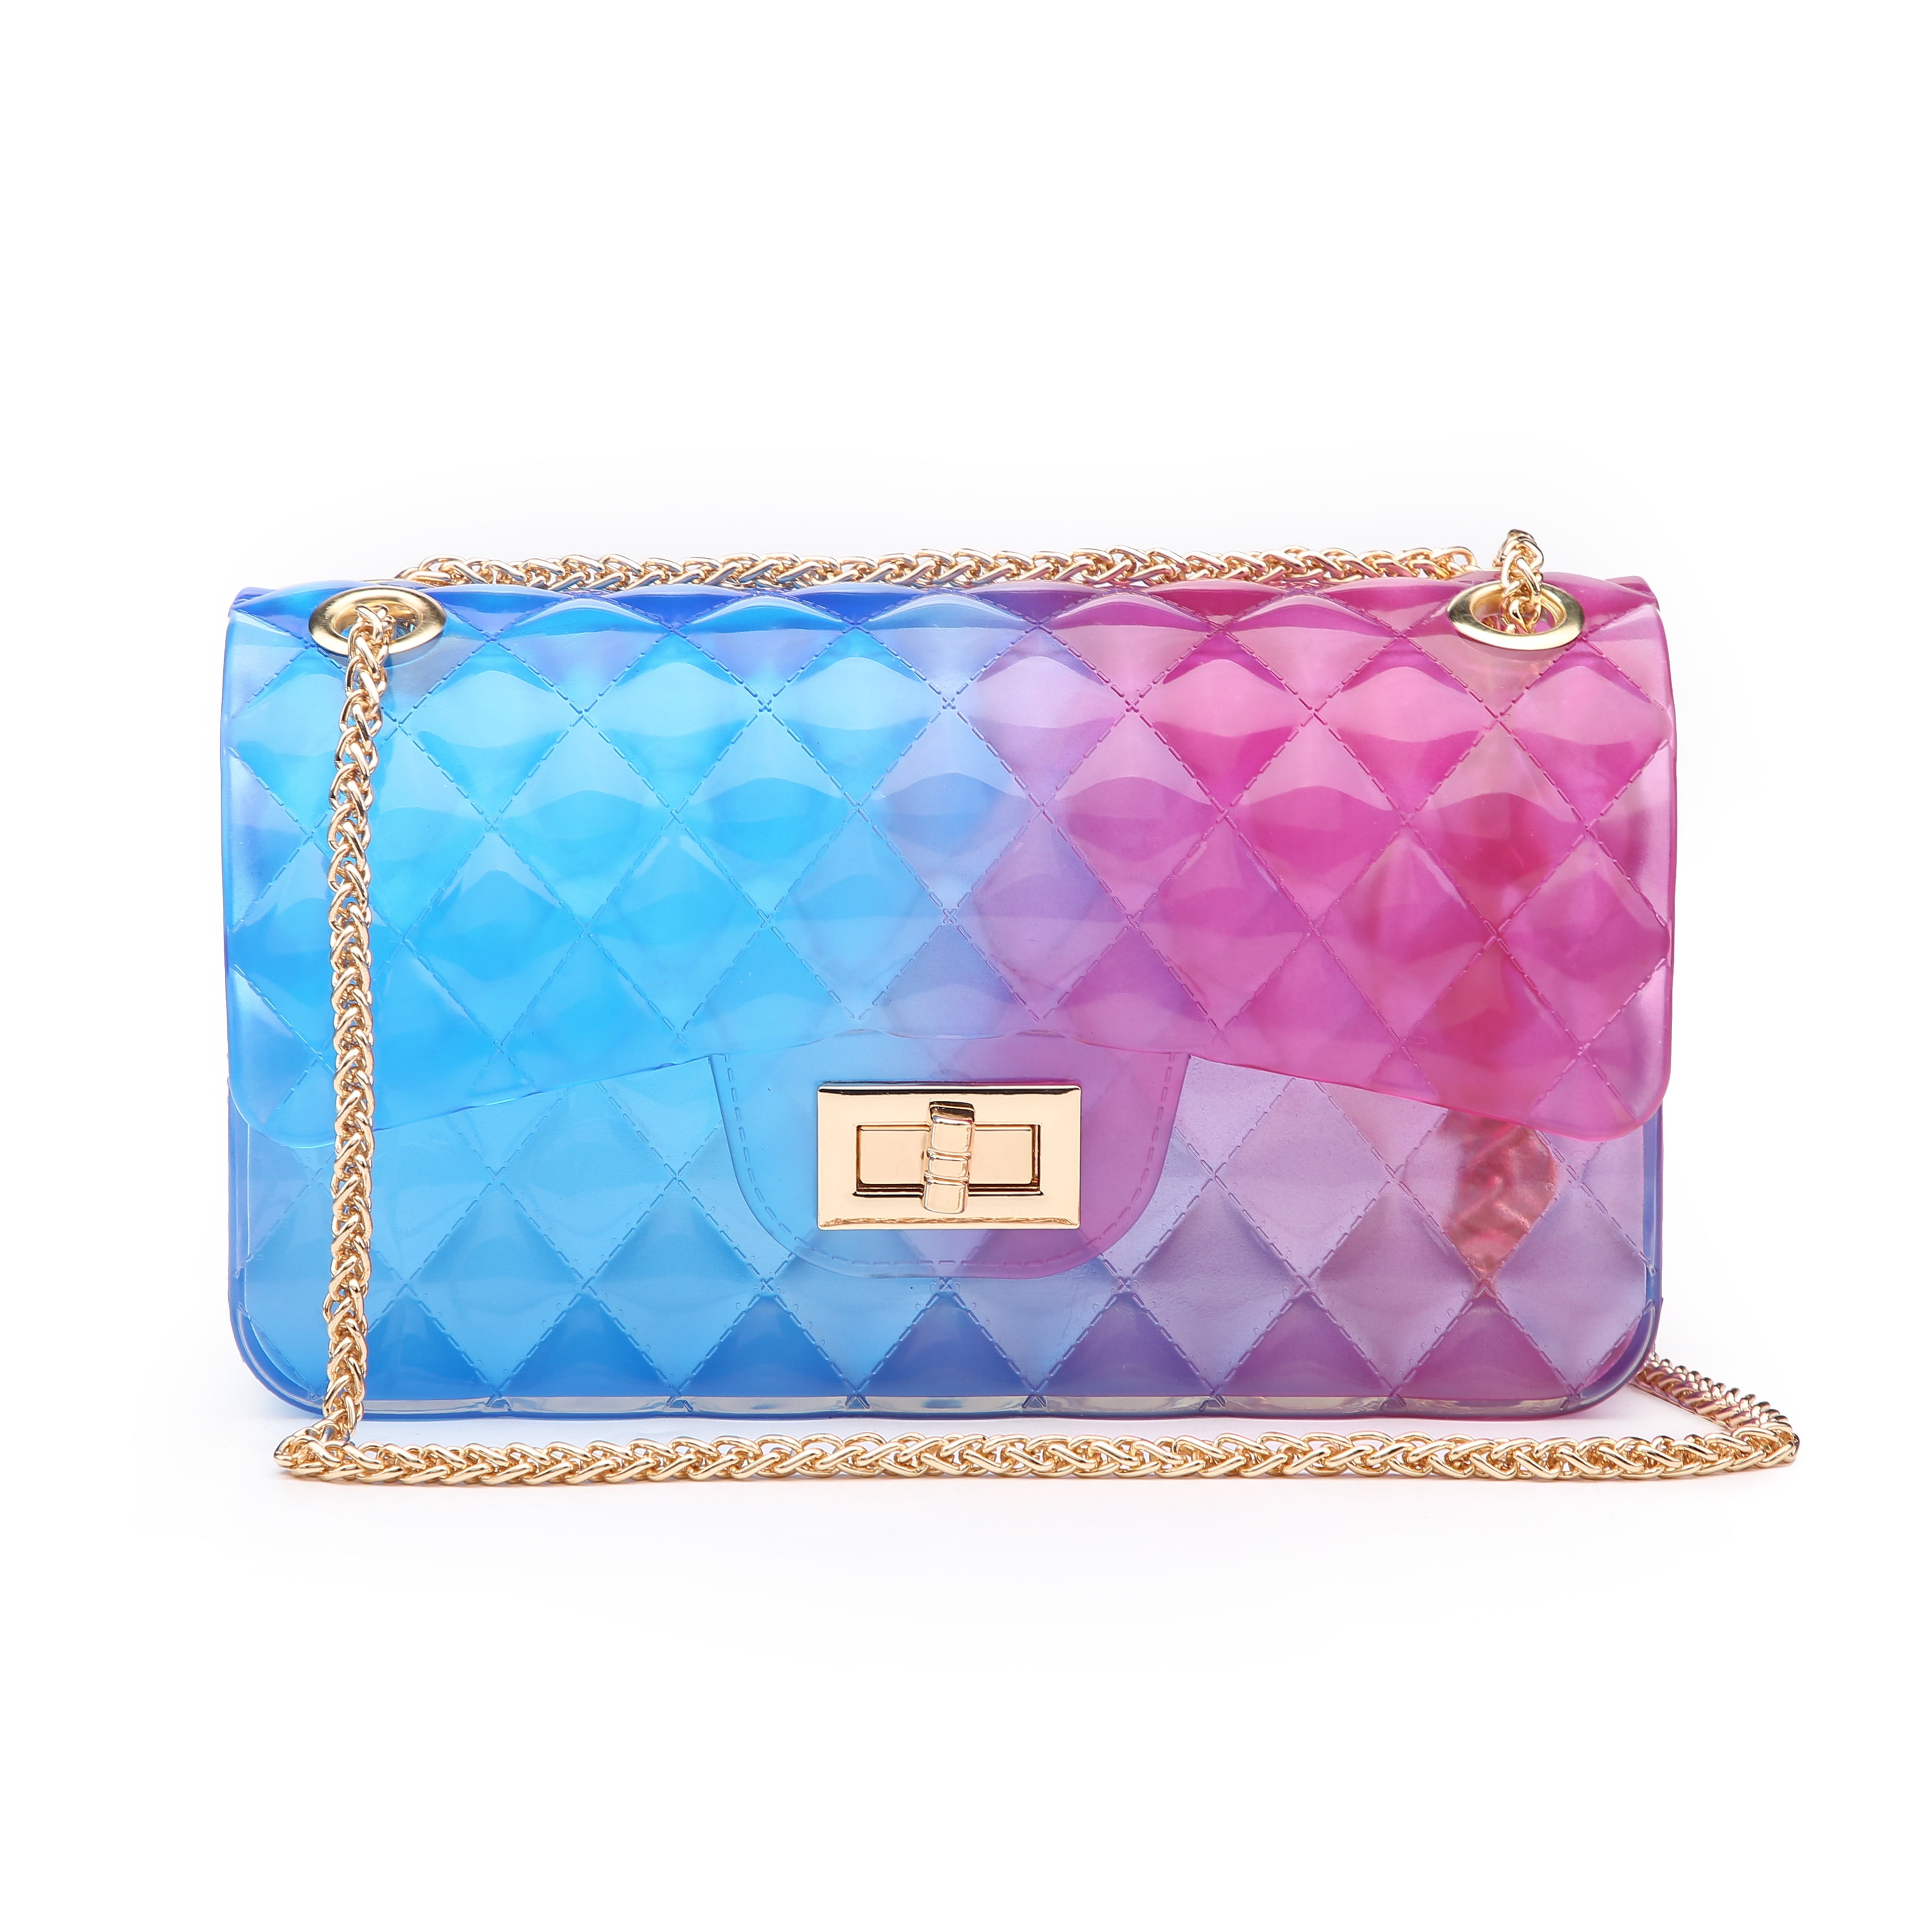 Hippie rainbow colours padded purse